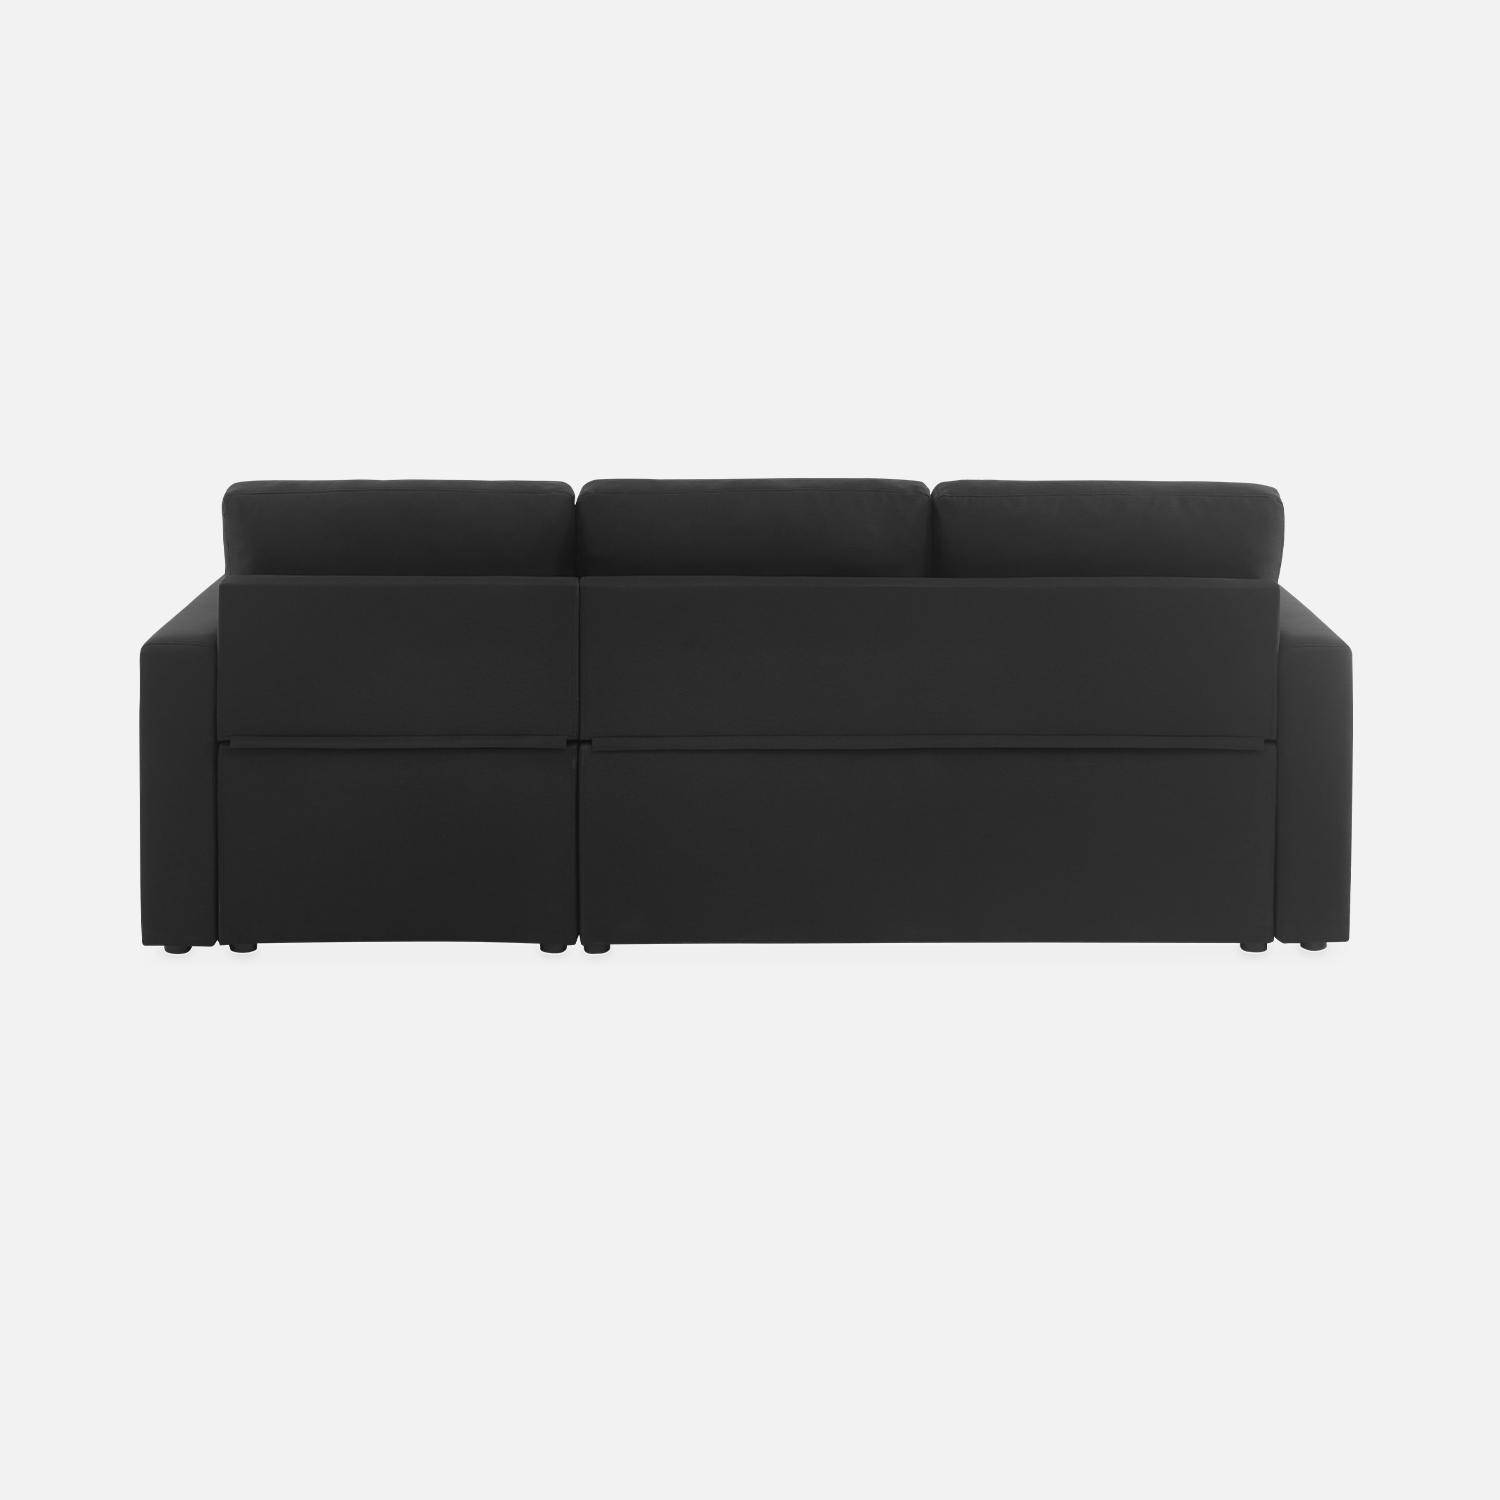 3-seater reversible black corner sofa bed with storage box, black L219xD81xH68cm, IDA Photo7